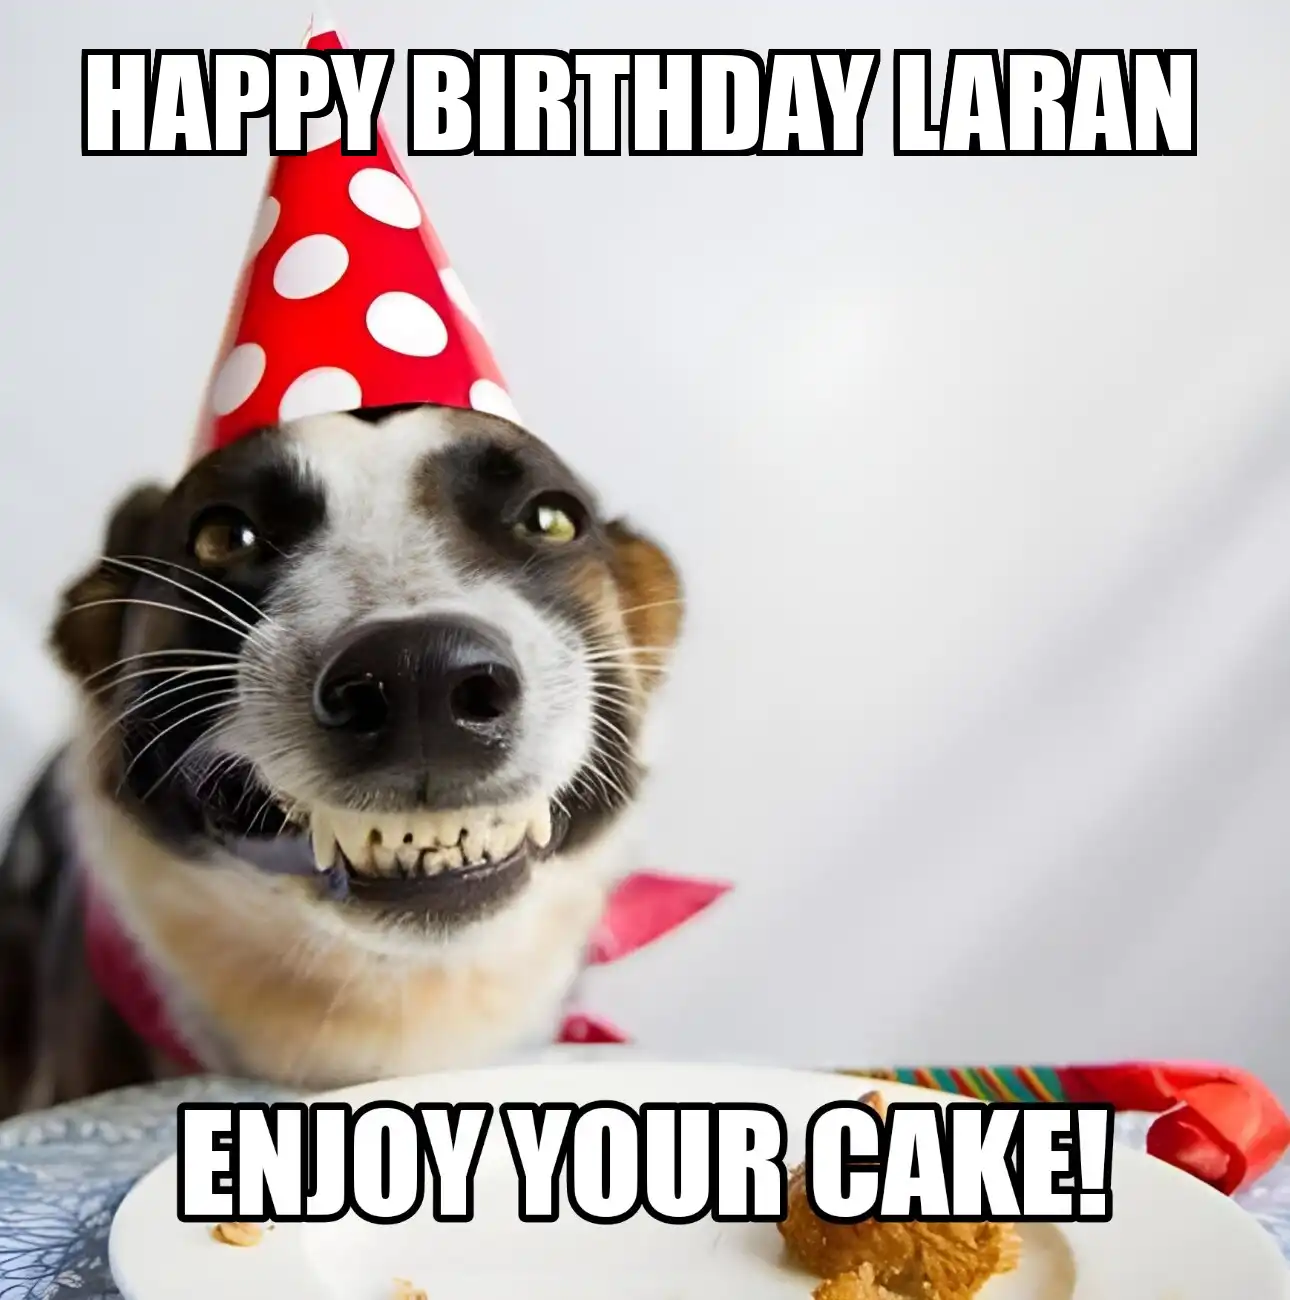 Happy Birthday Laran Enjoy Your Cake Dog Meme